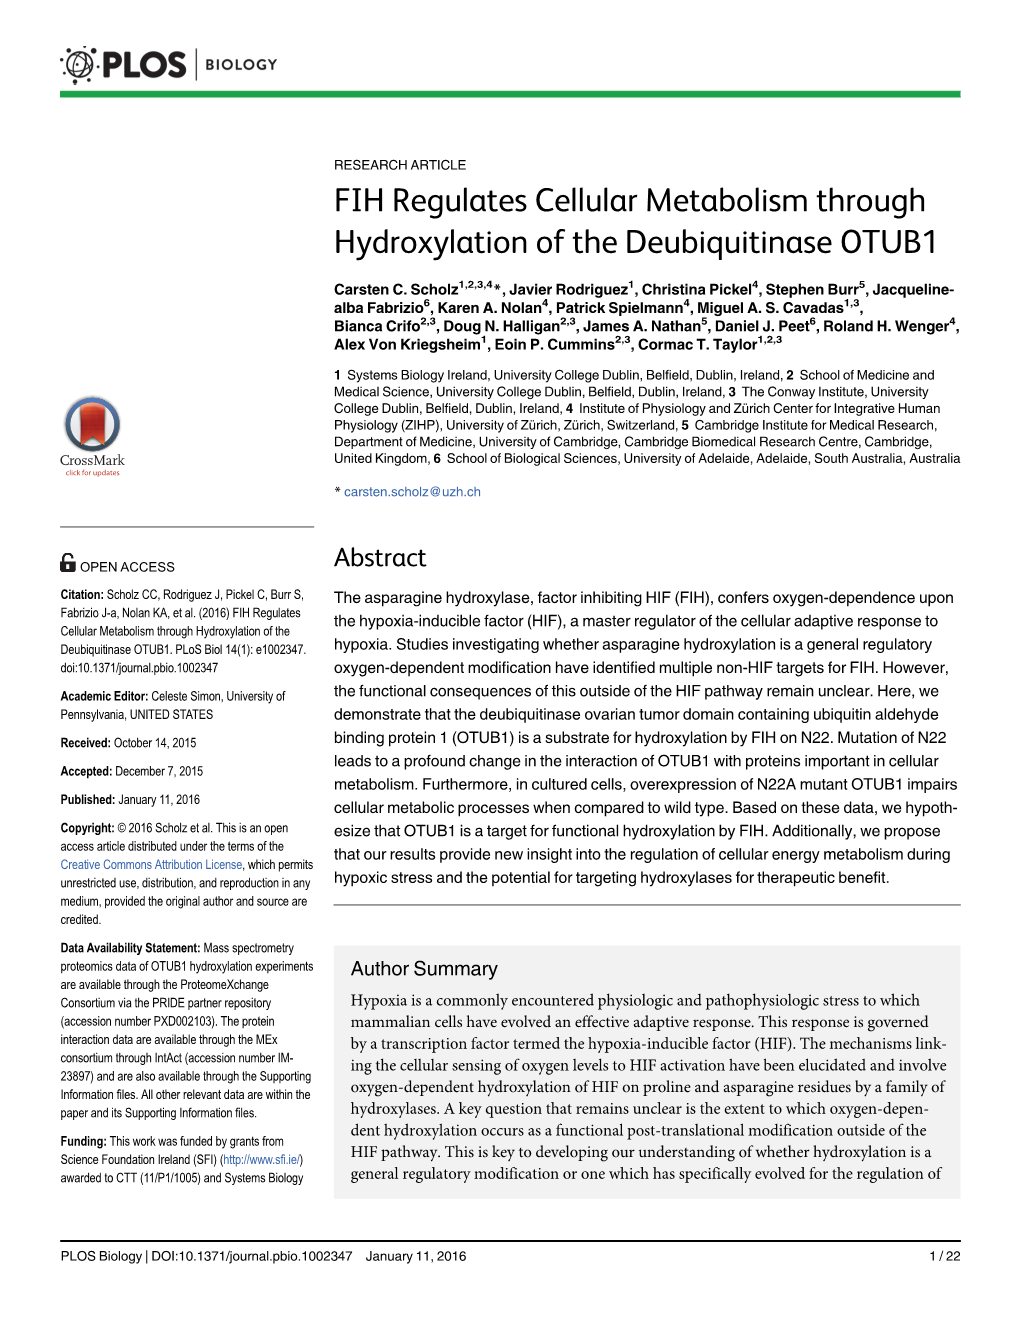 FIH Regulates Cellular Metabolism Through Hydroxylation of the Deubiquitinase OTUB1